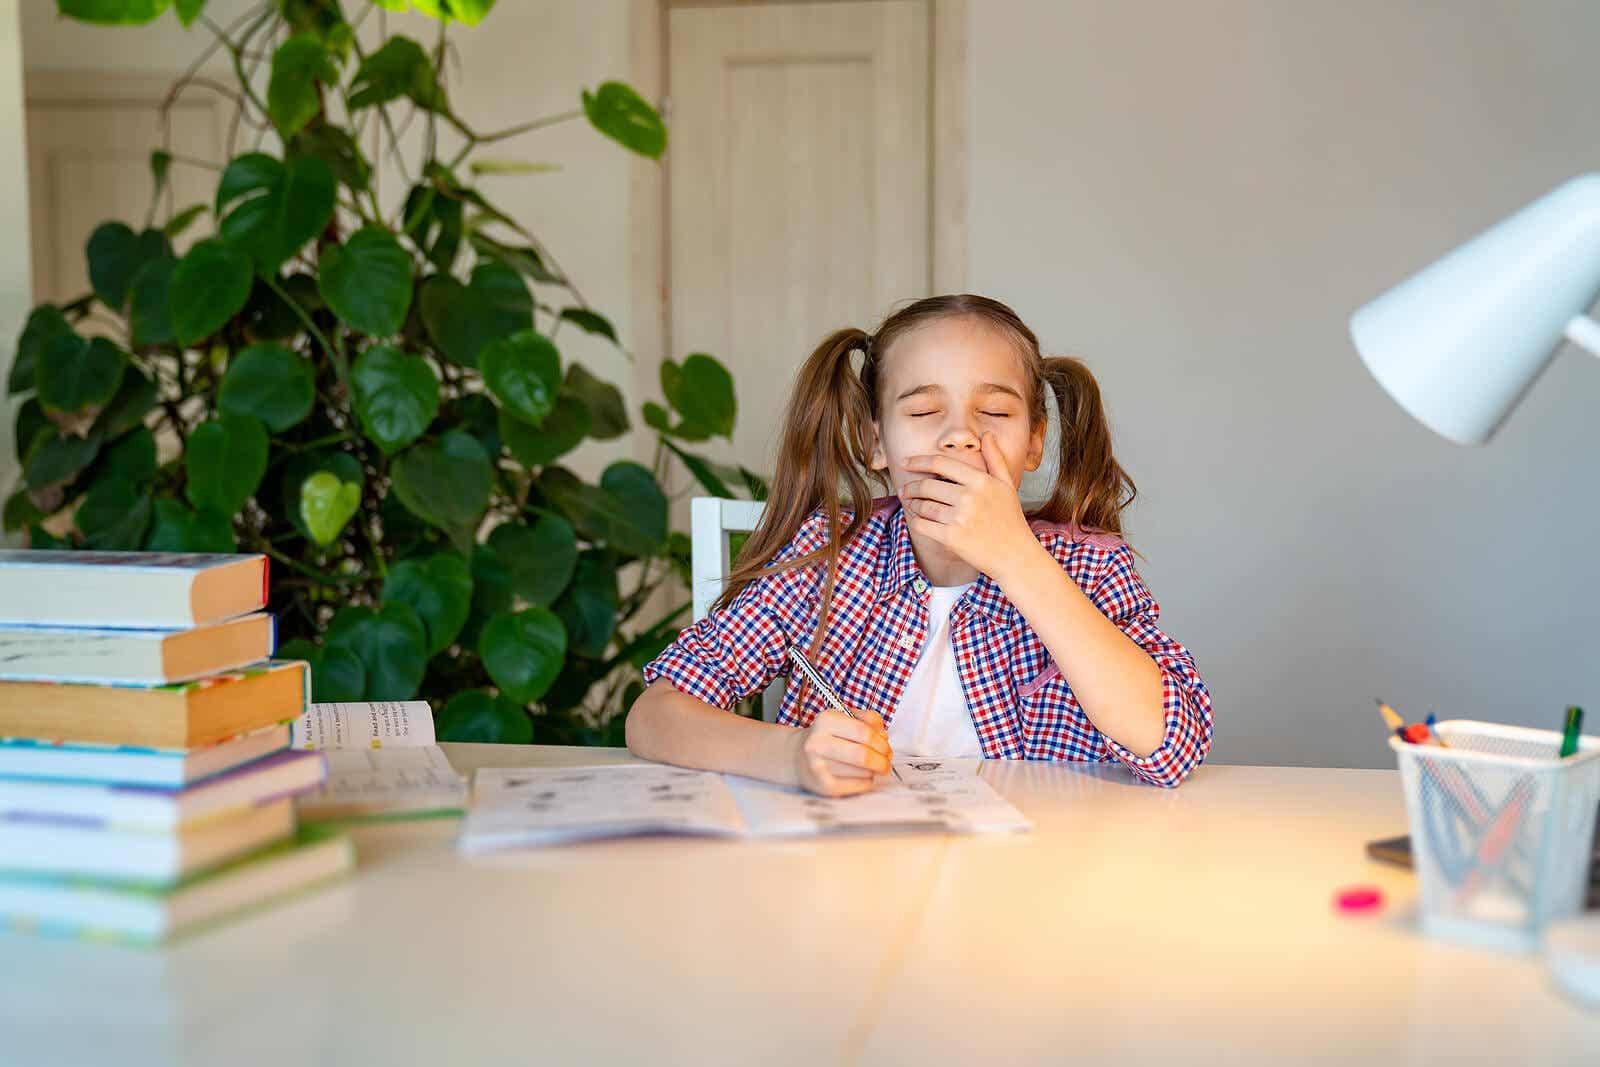 A teenage girl yawning while she does her homework.